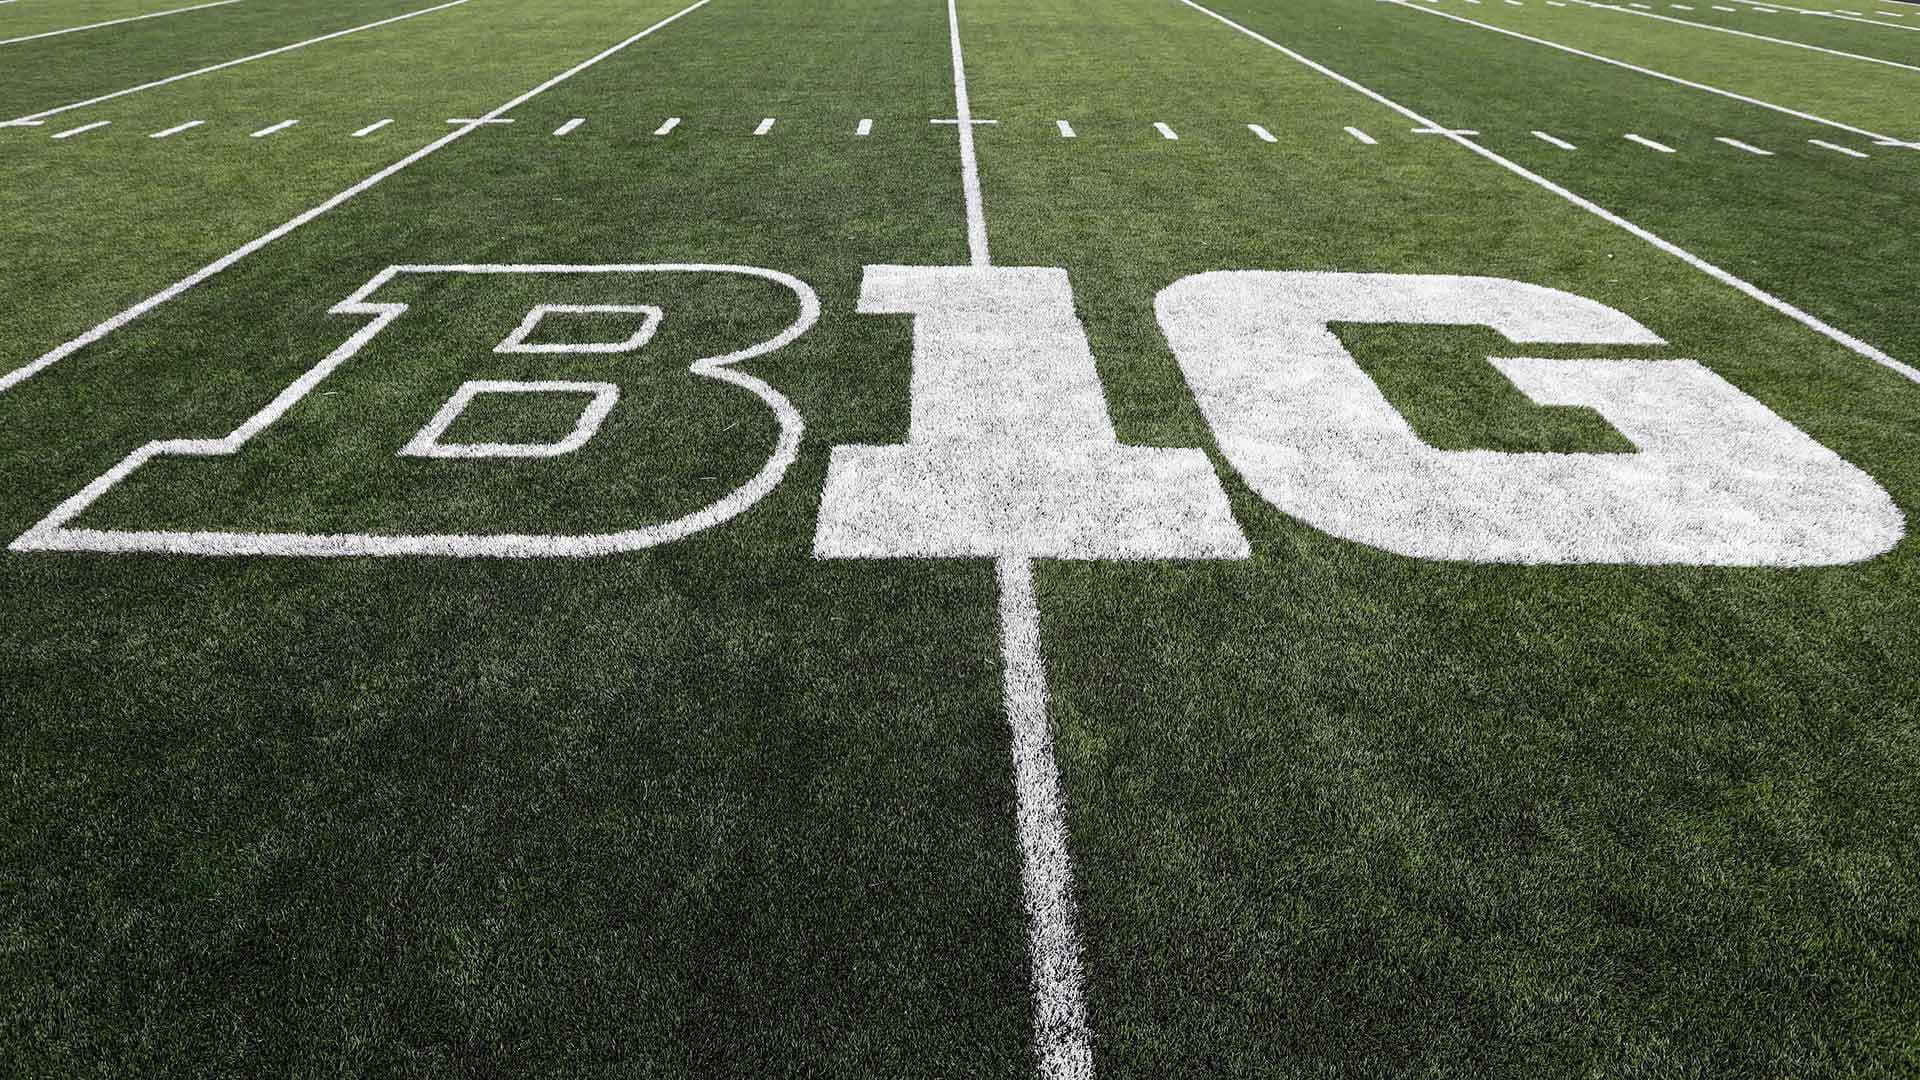 Big Ten B1G logo on football field